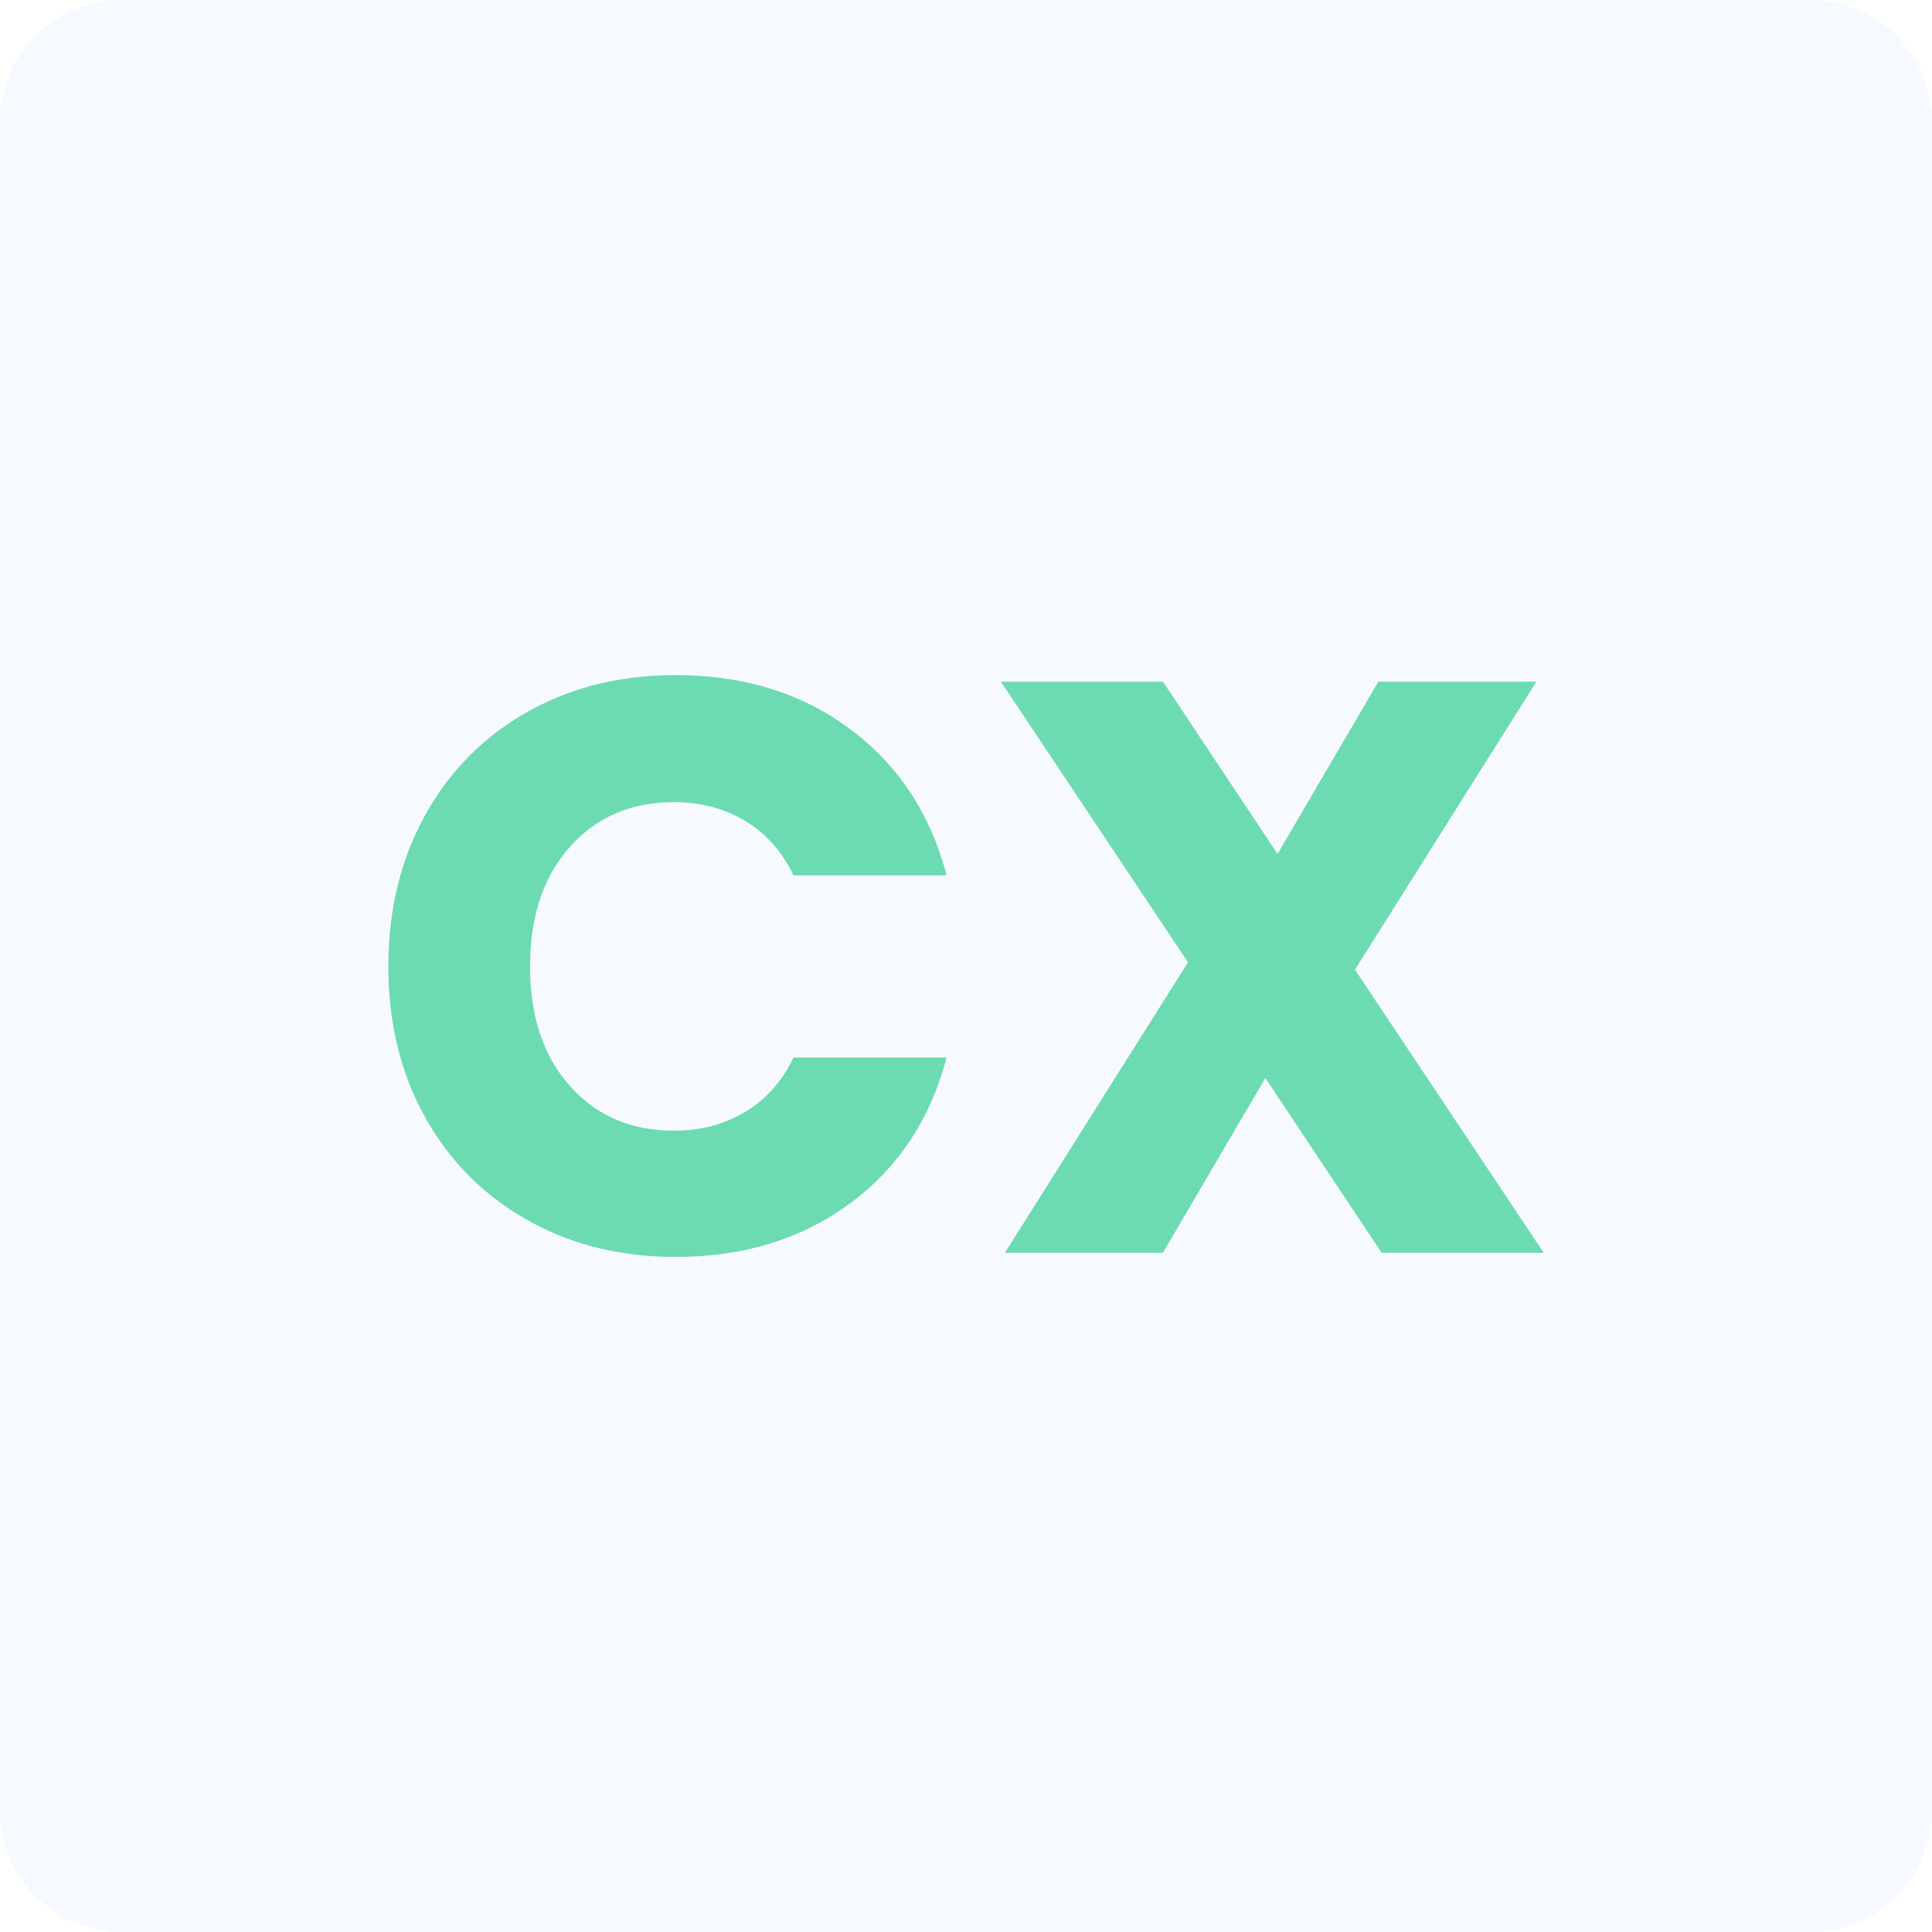 CX - Customer Experience